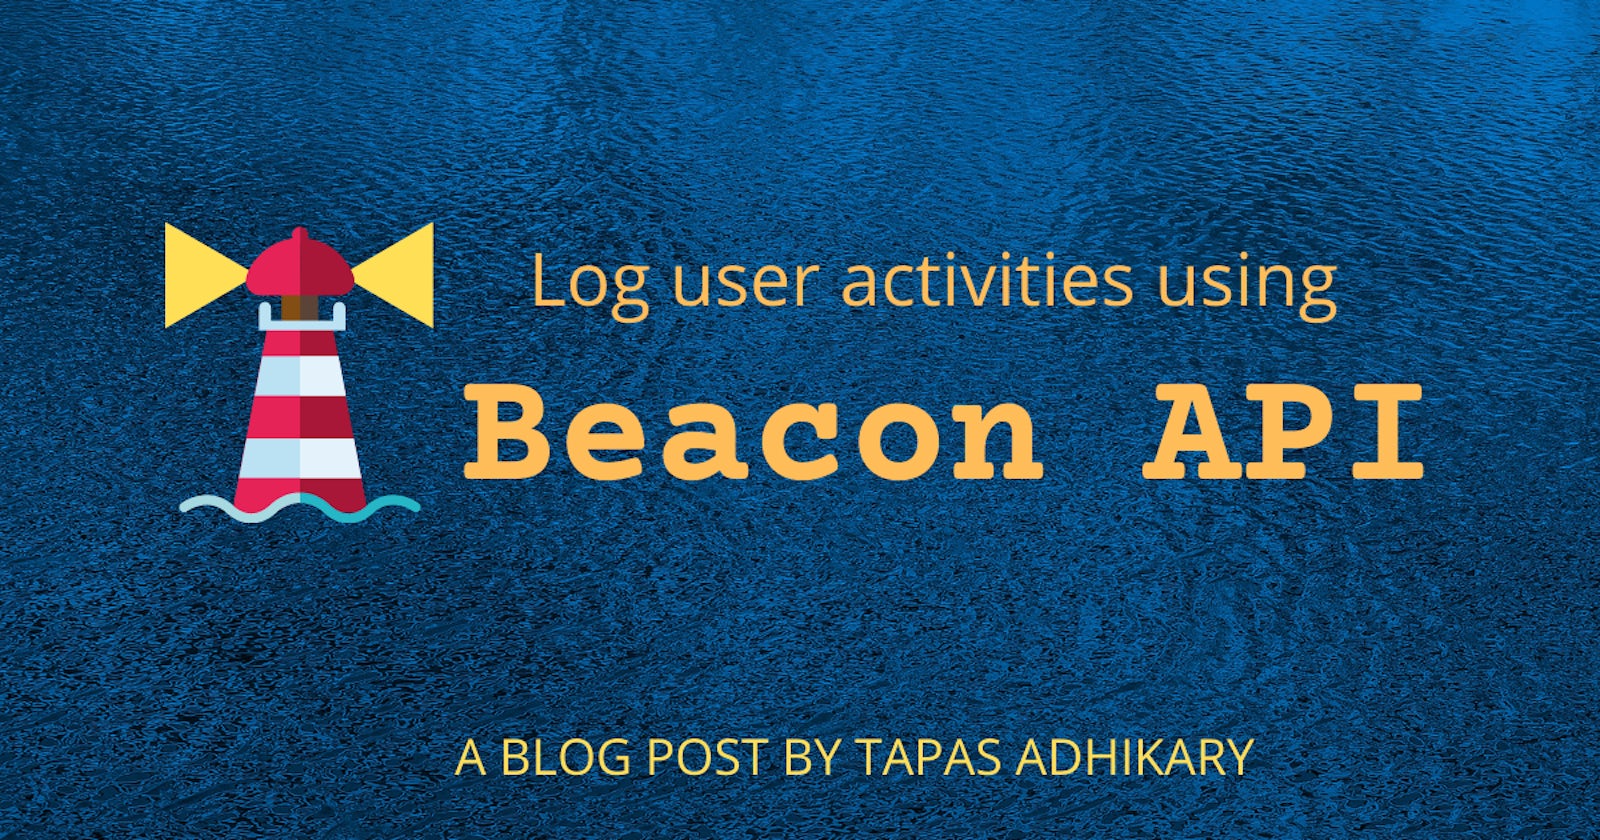 How to log user activities using the Beacon Web API?